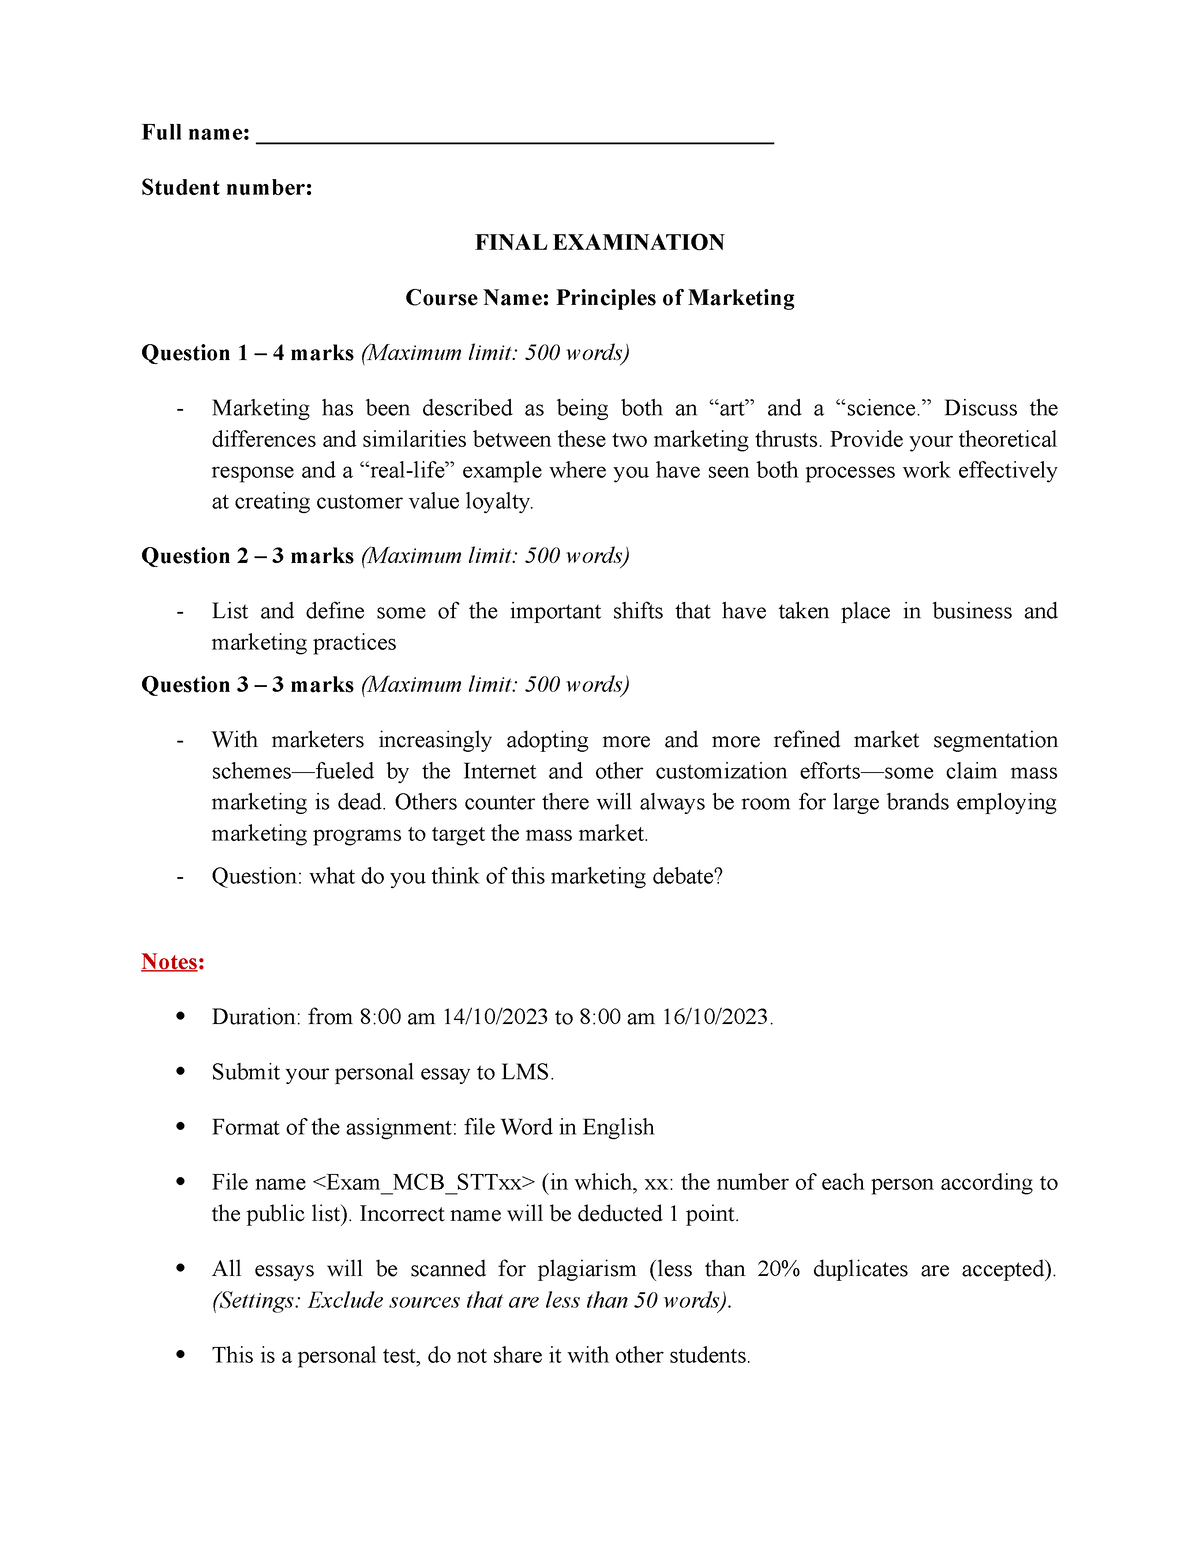 MCB Final Exam Oct 2023 English Full name